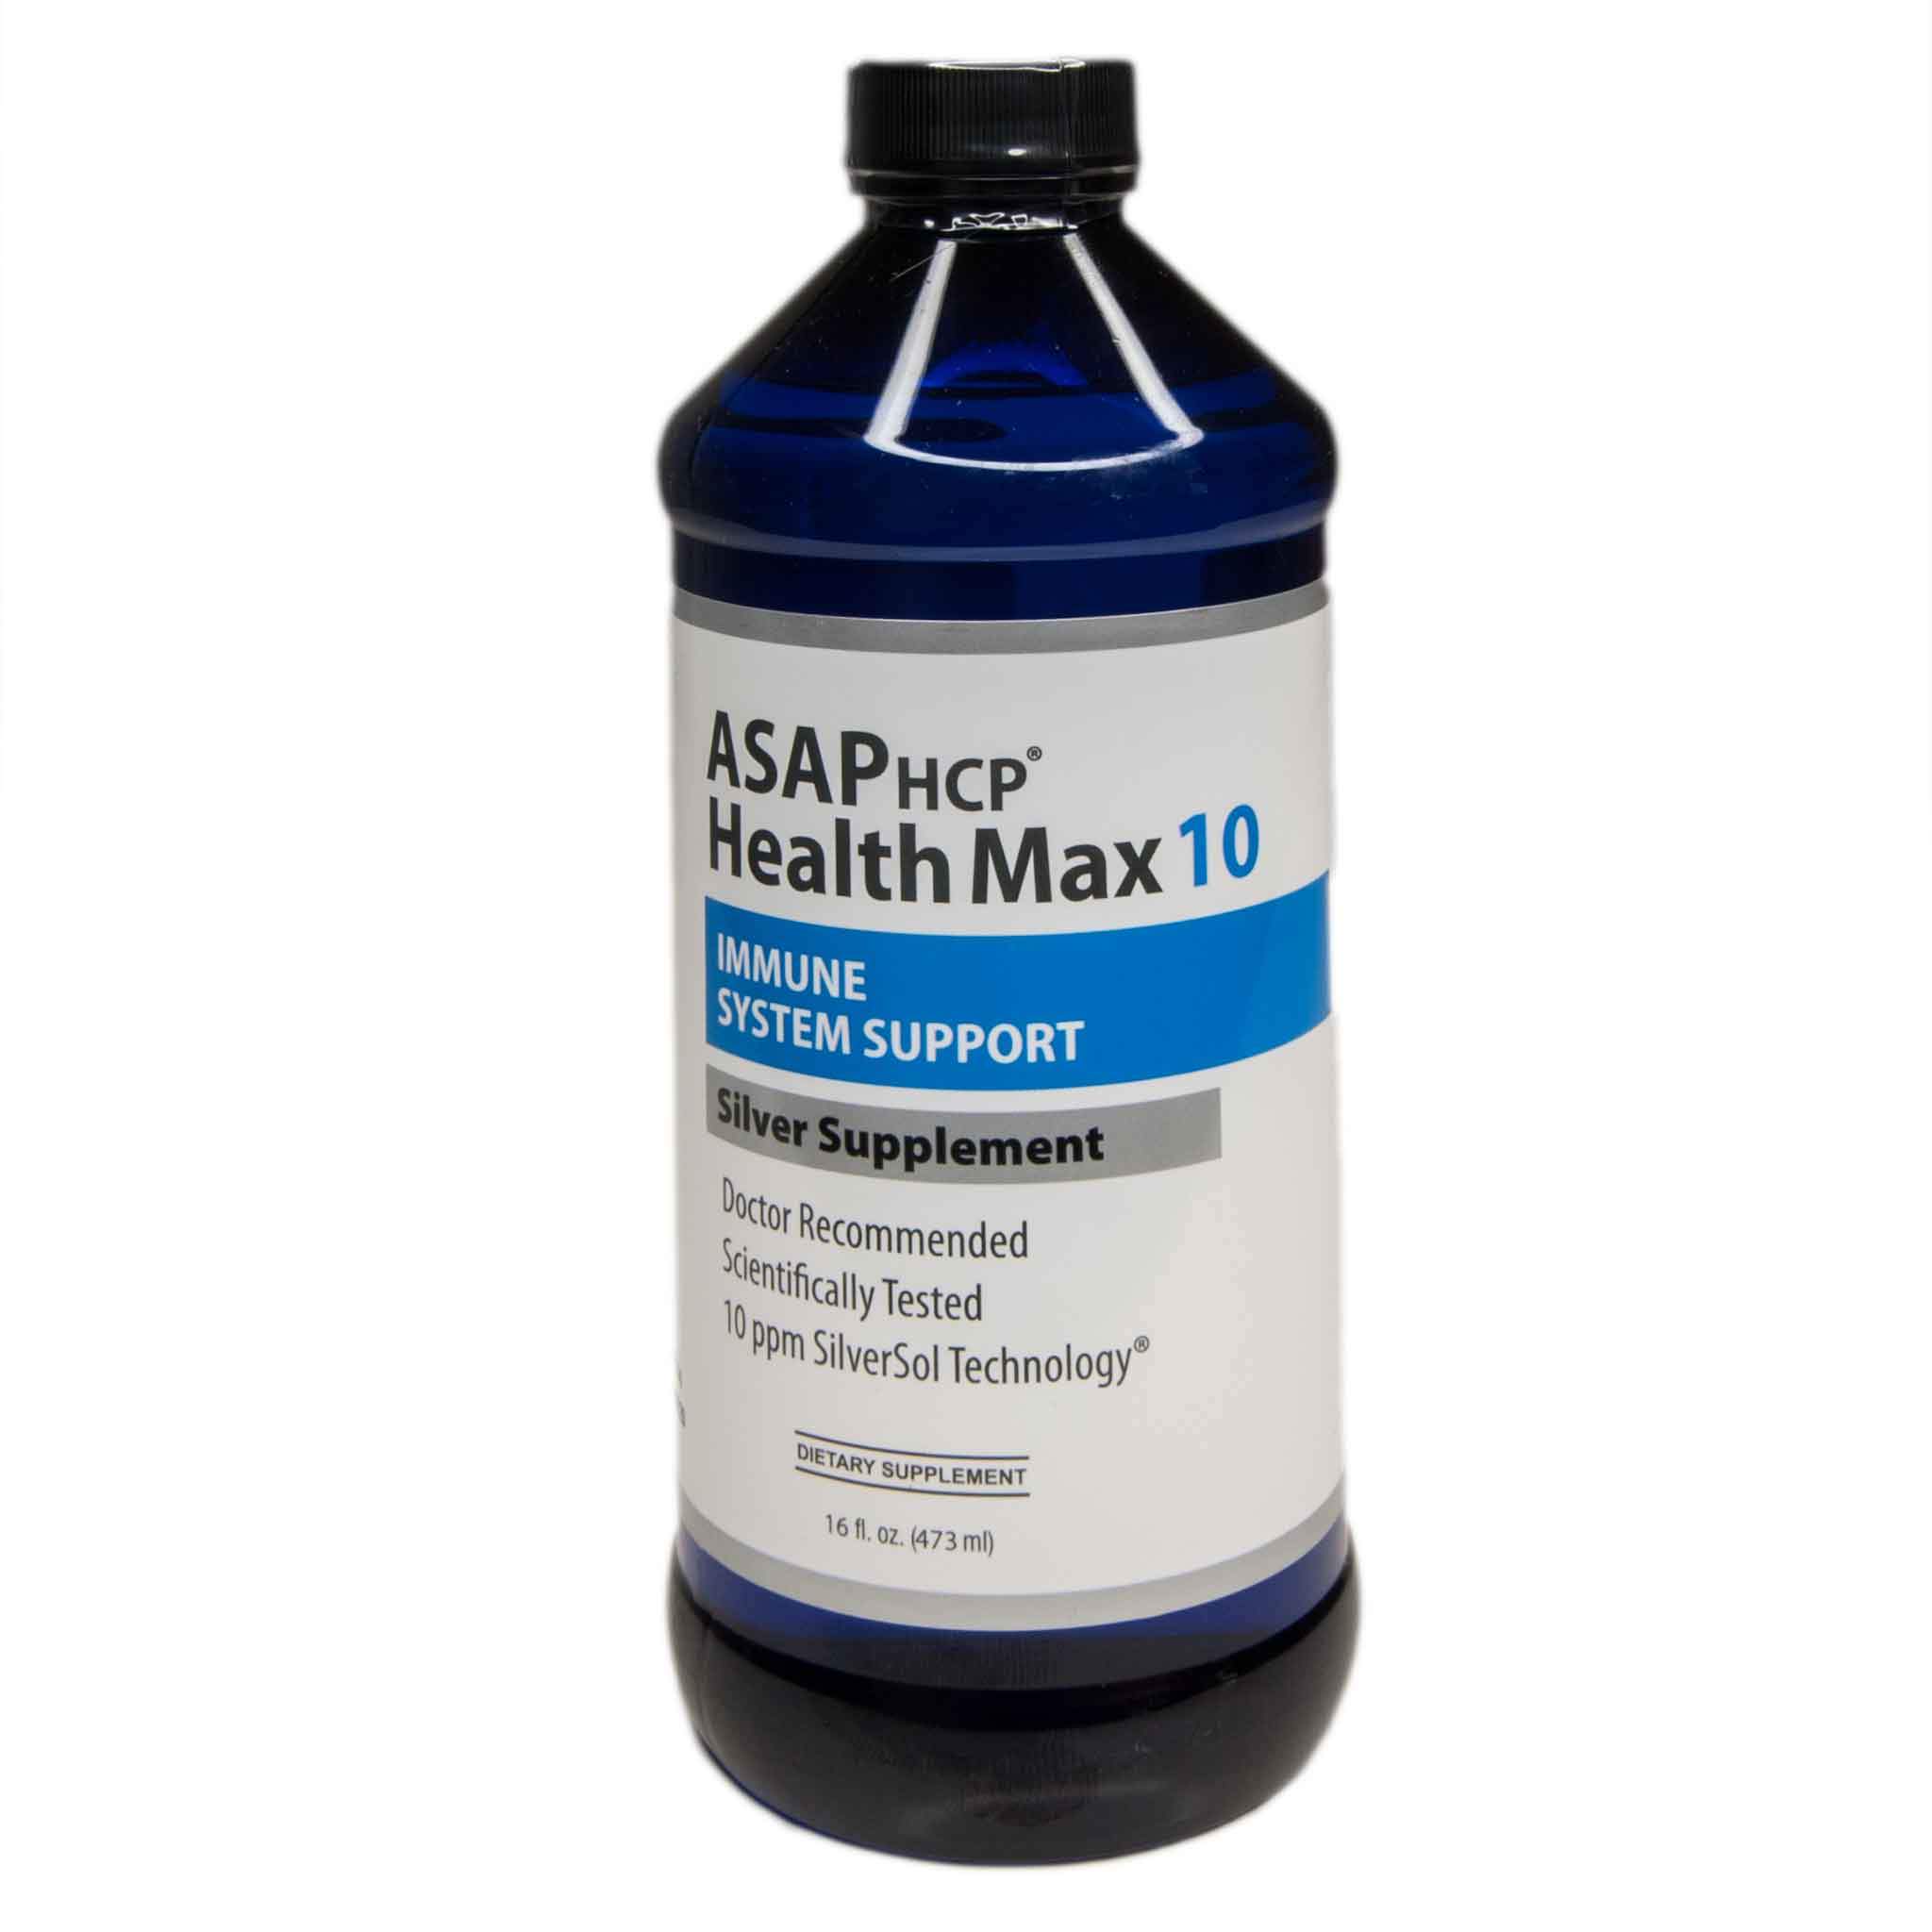 ASAP Health Max 10 Silver supplement